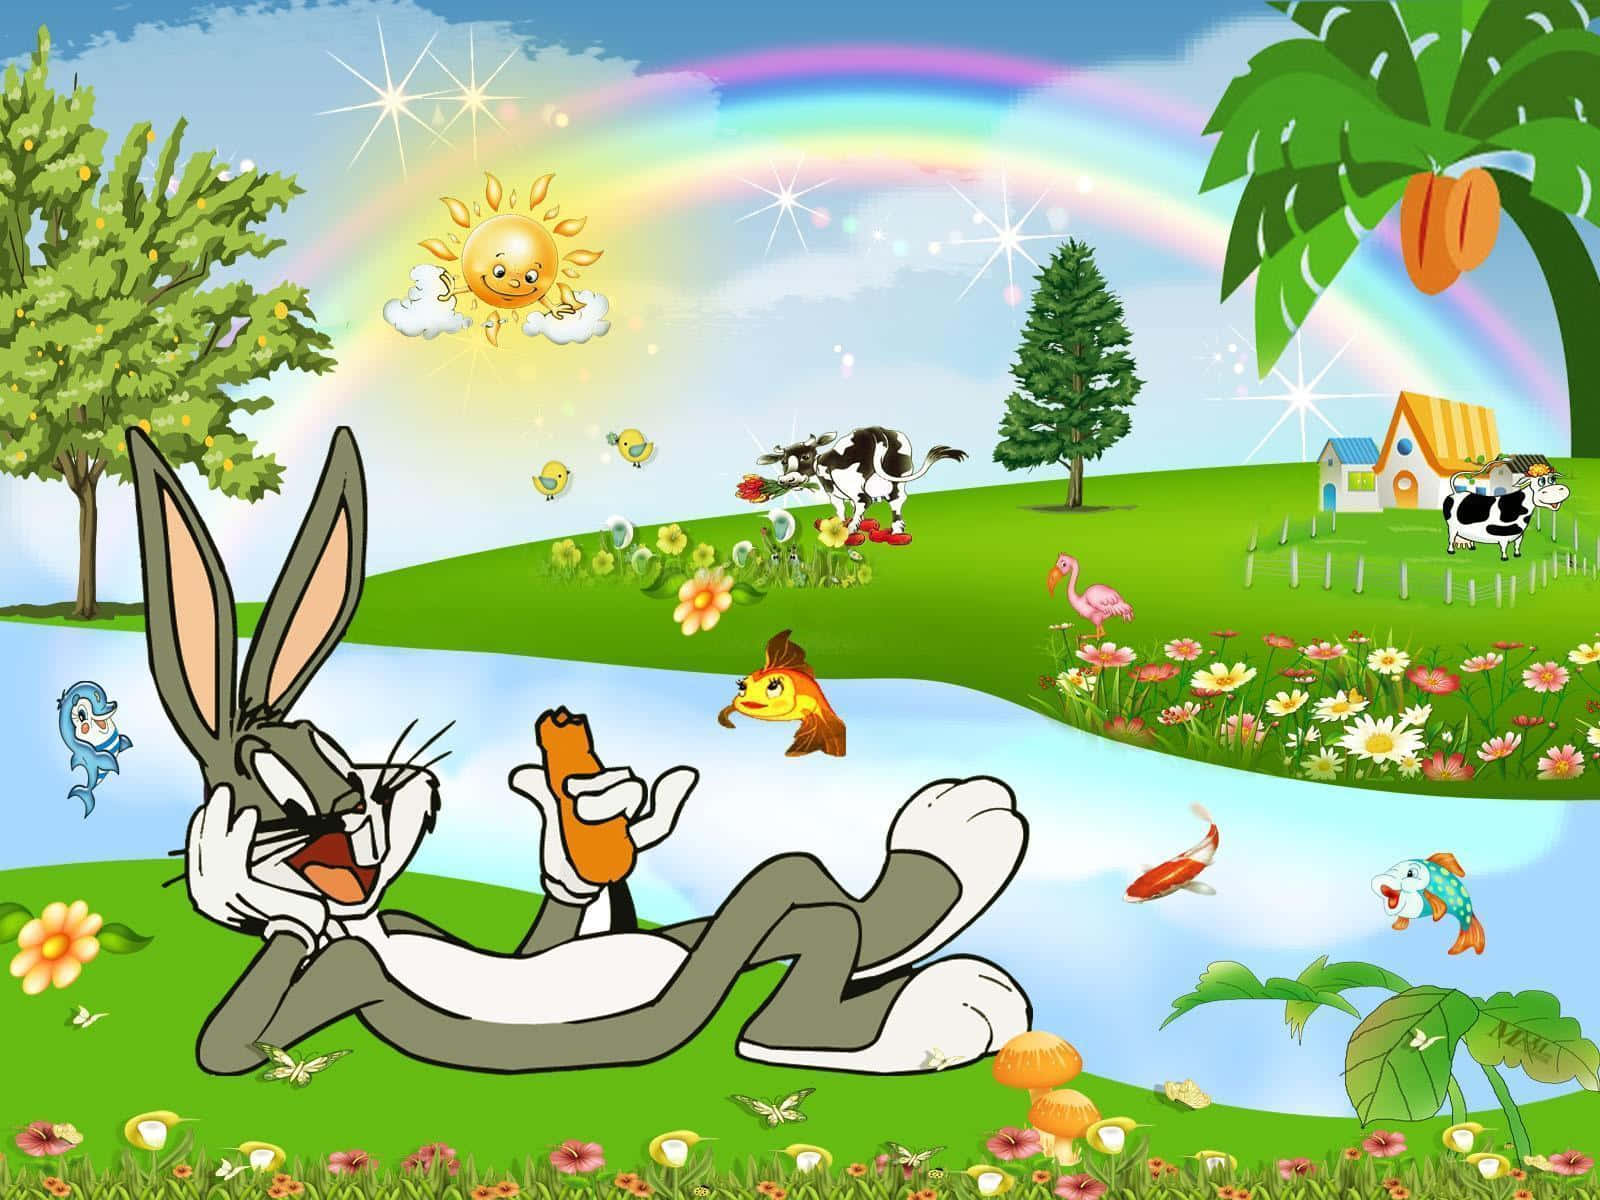 Bugs Bunny, the wittiest, wisecracking cartoon character